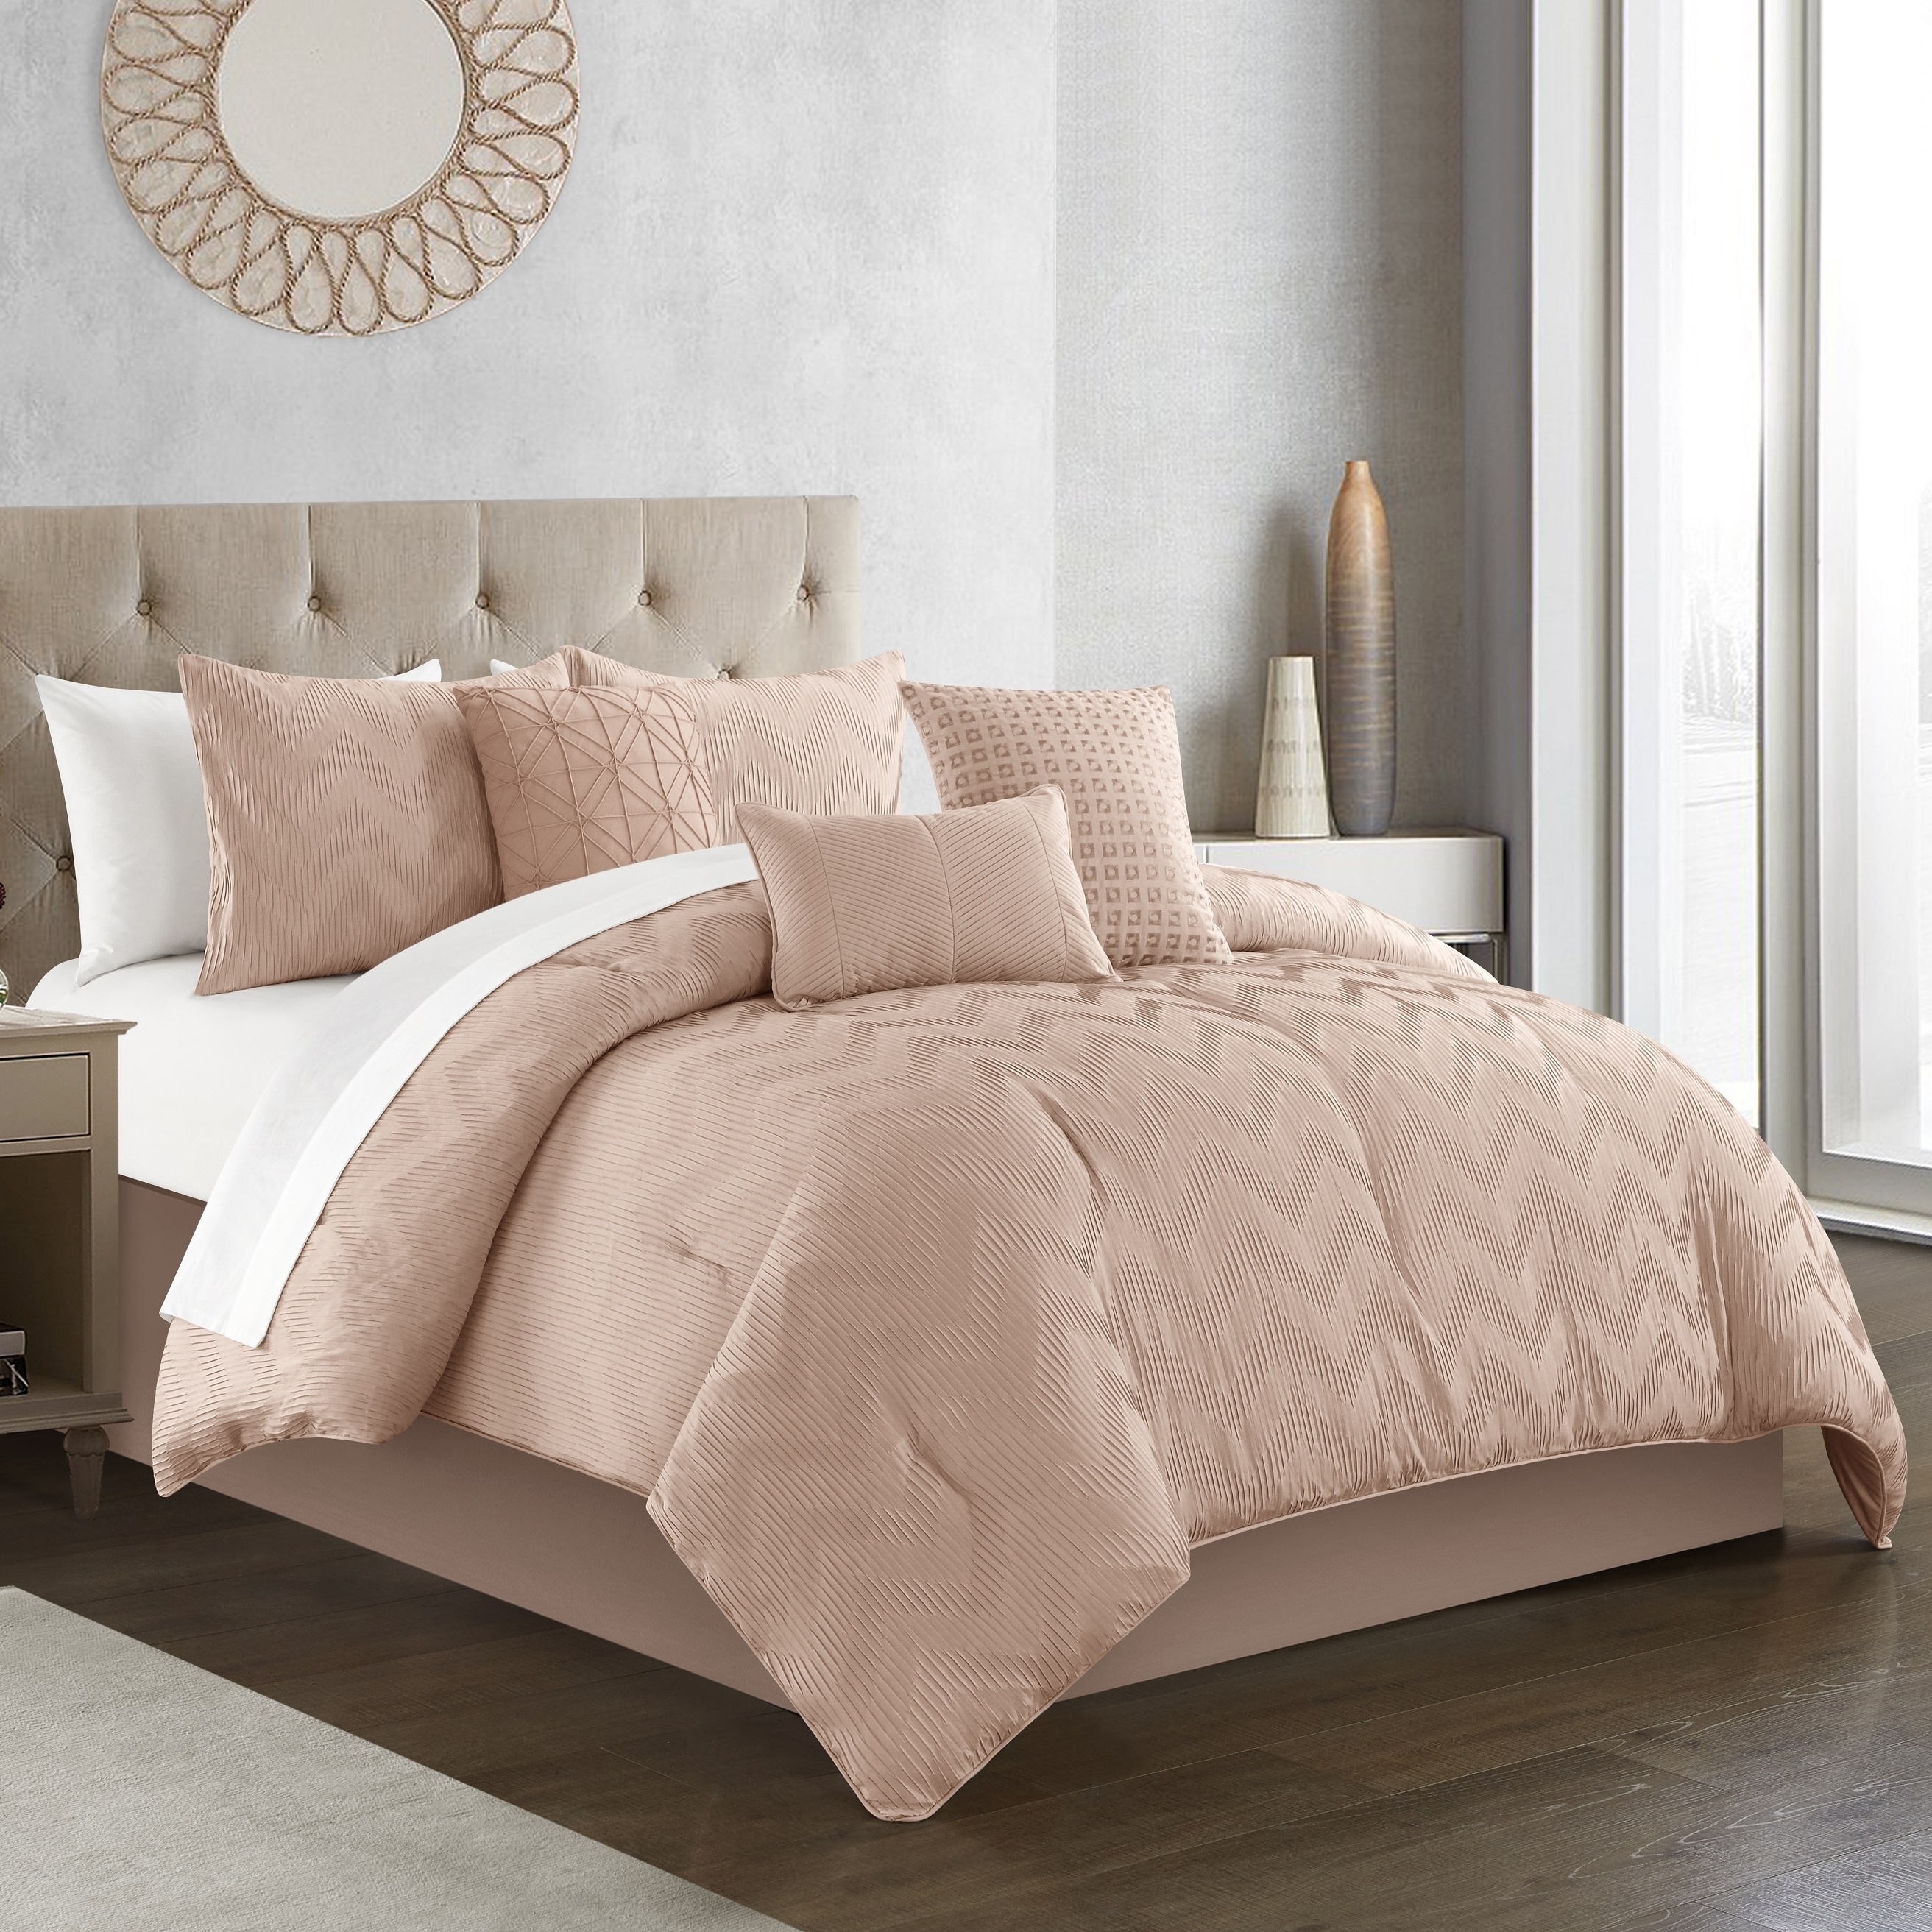 Natalia 6 Piece Comforter Set Plush Ribbed Chevron Design Bedding - Decorative Pillows Shams Included - Grey, King